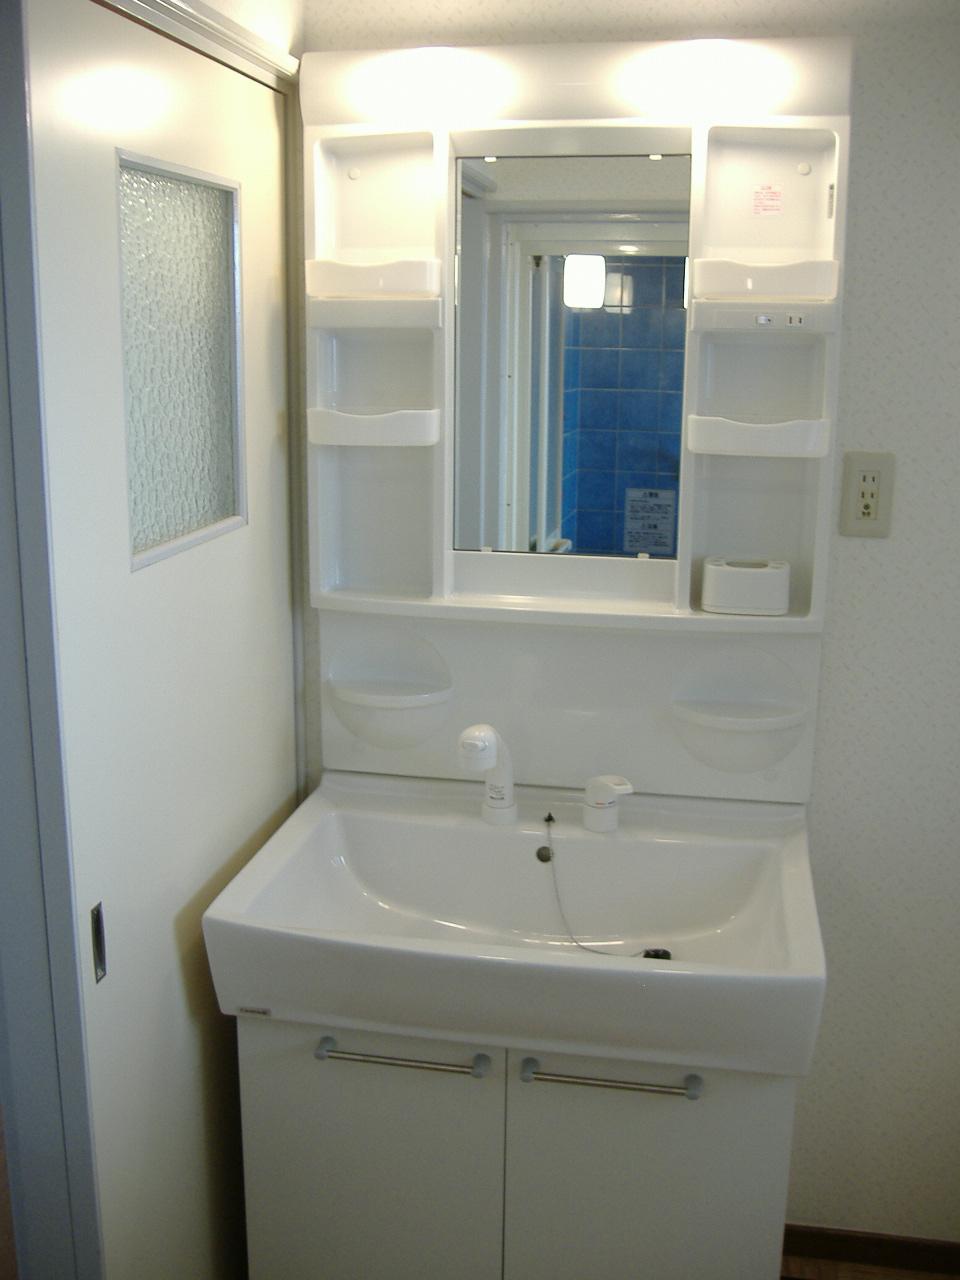 Wash basin, toilet. Shampoo dresser.